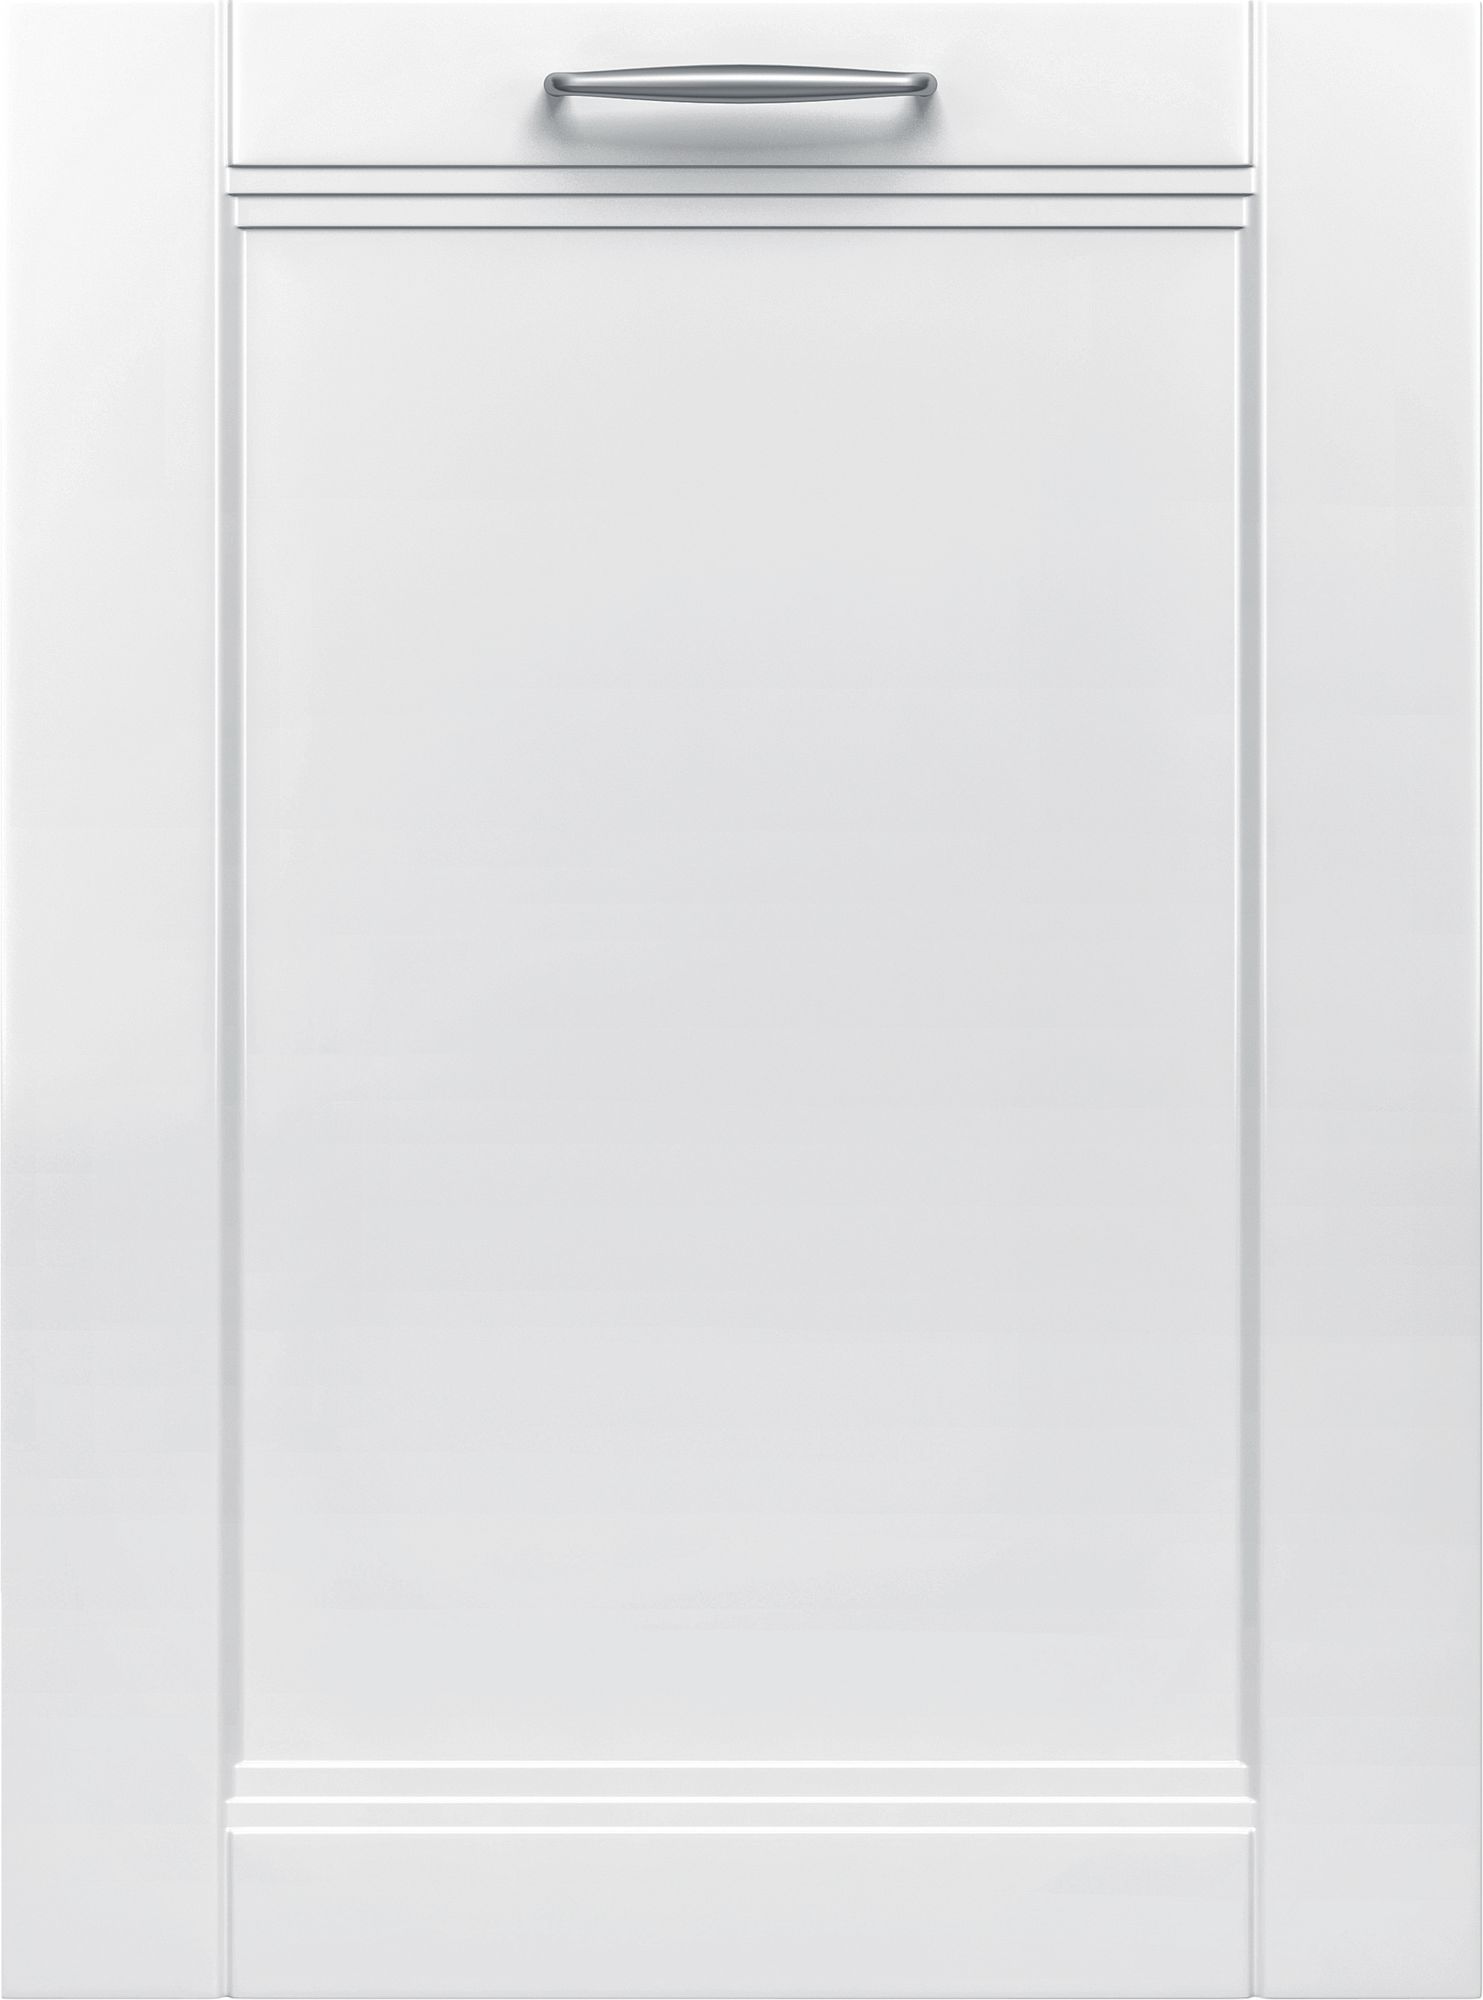 Bosch Benchmark® 24" Custom Panel Built In Dishwasher